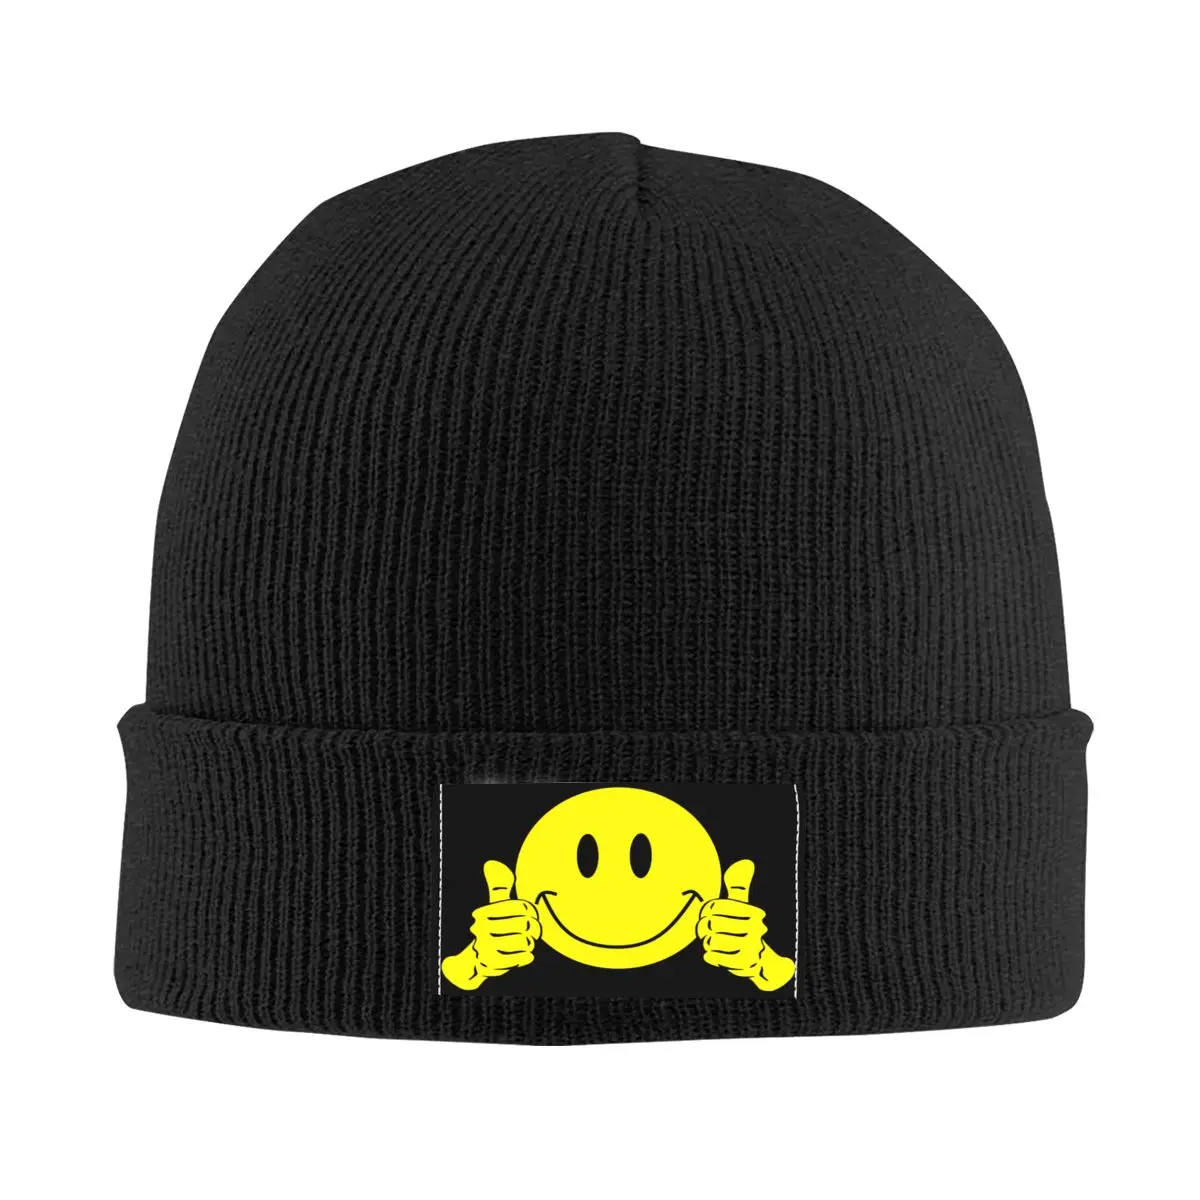 

Thumbs Up Emotion Smile Face Bonnet Hat Knitted Hats Men Women Cool Unisex Adult Winter Warm Skullies Beanies Caps